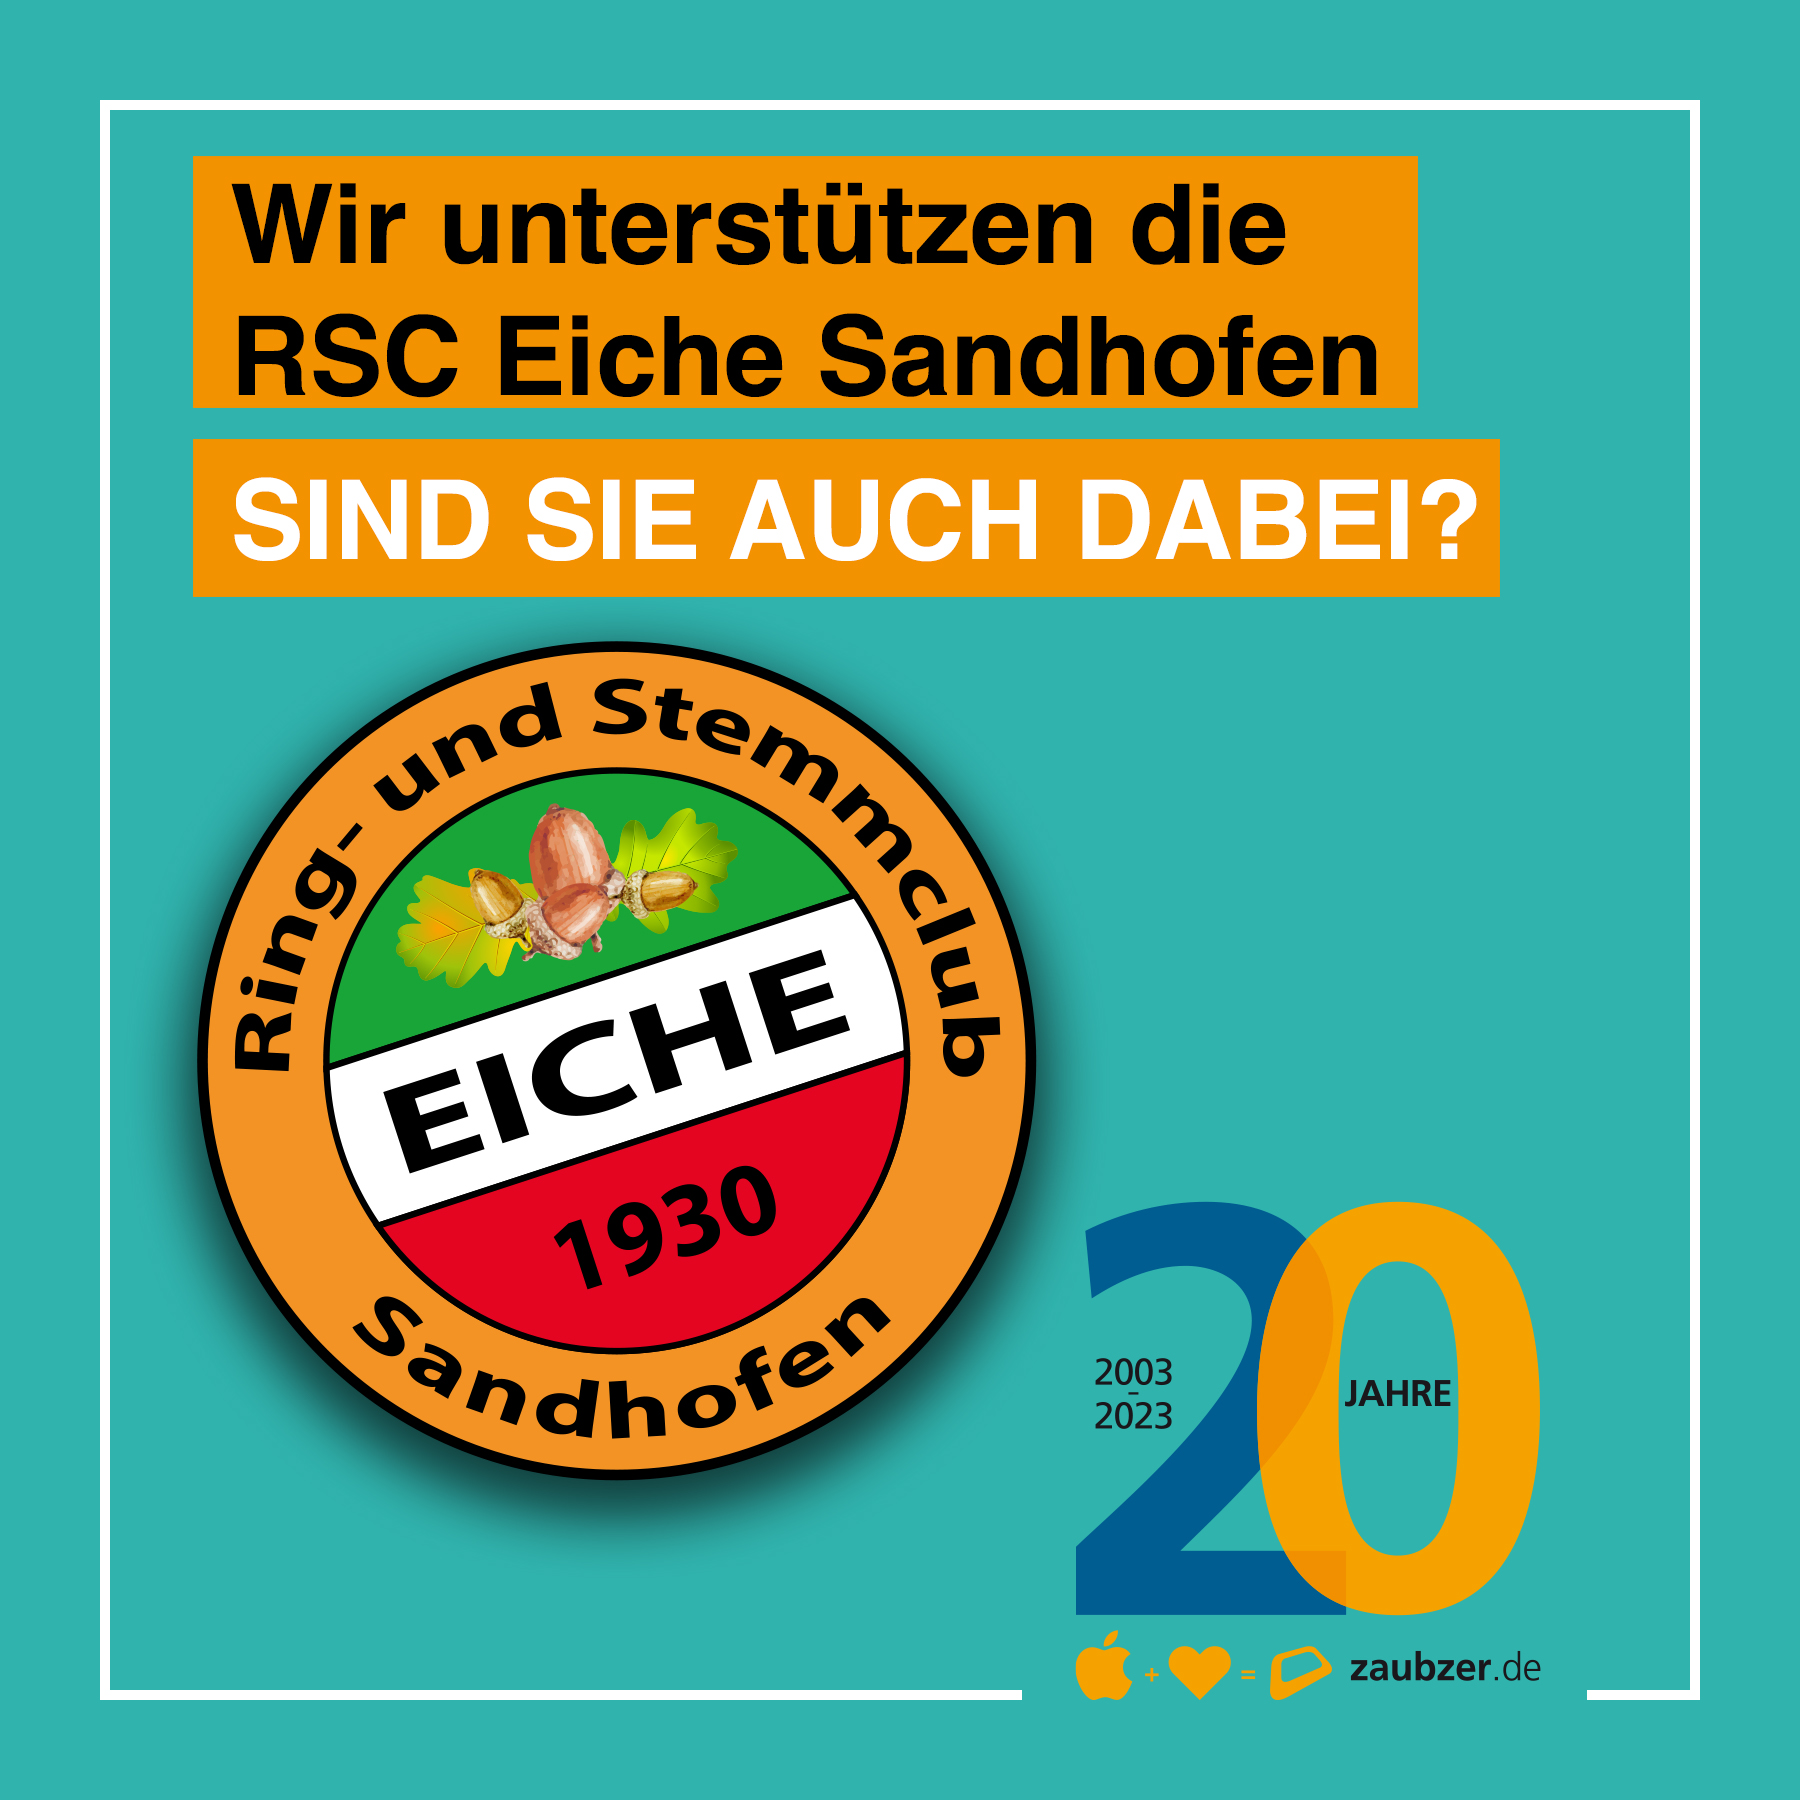 RSC Eiche Sandhofen - zaubzer.de - Mannheim